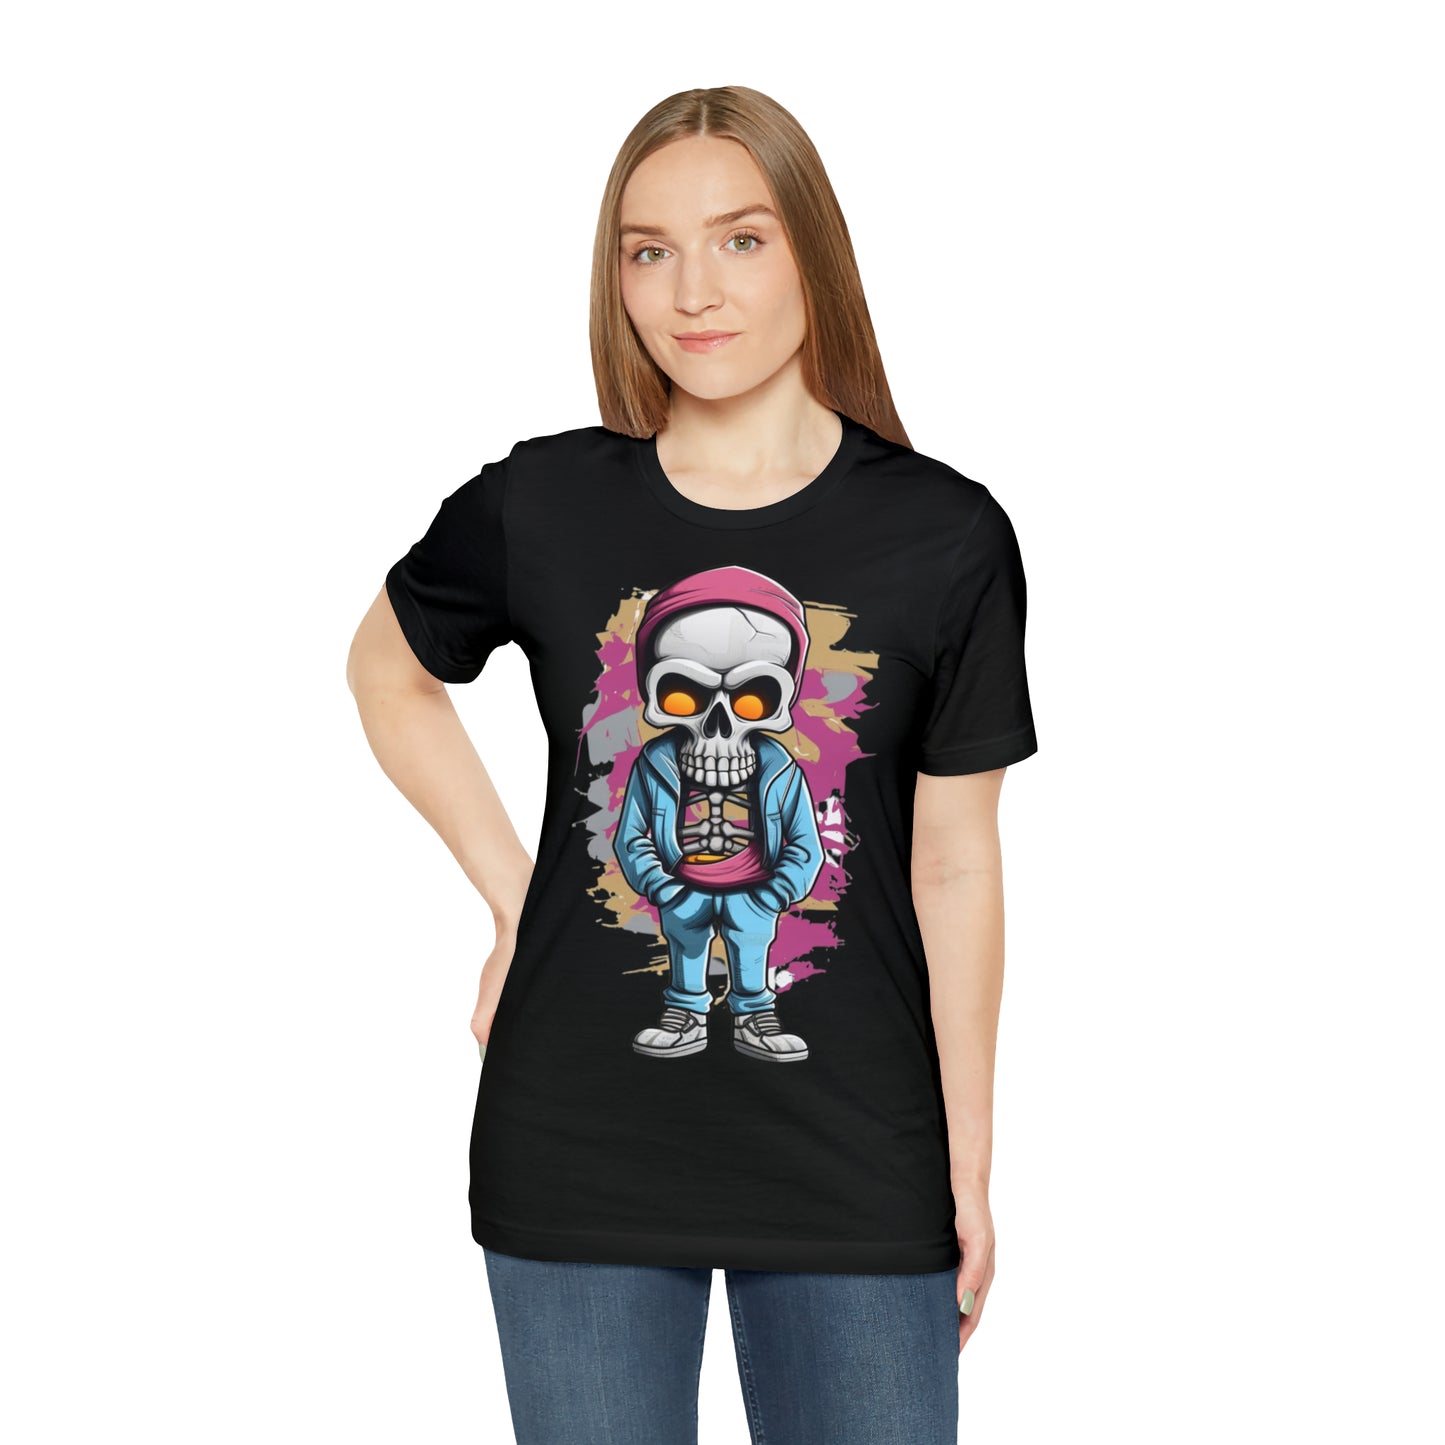 Mystical Skull Boy T-Shirt - Dark Fantasy Unisex Tee for a Bold Statement